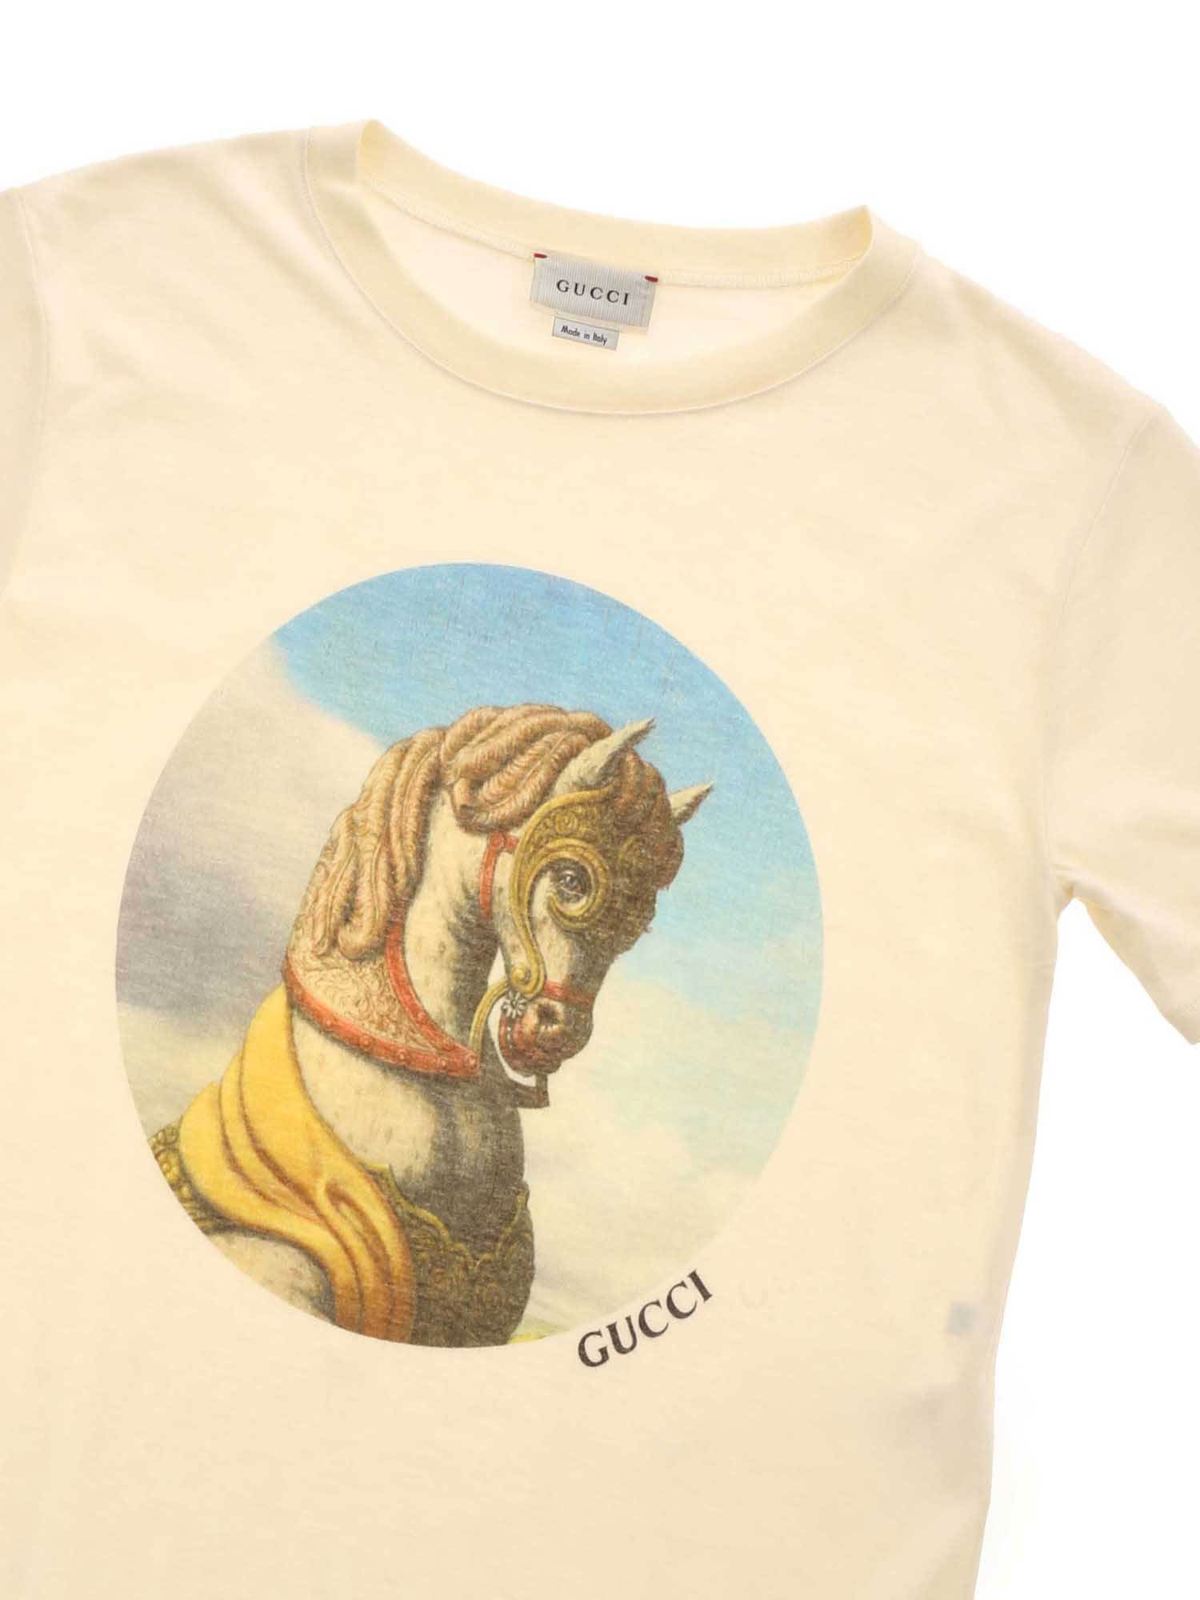 Gucci - Multicolor print T-shirt in cream color - t-shirts - 580991XJB999756